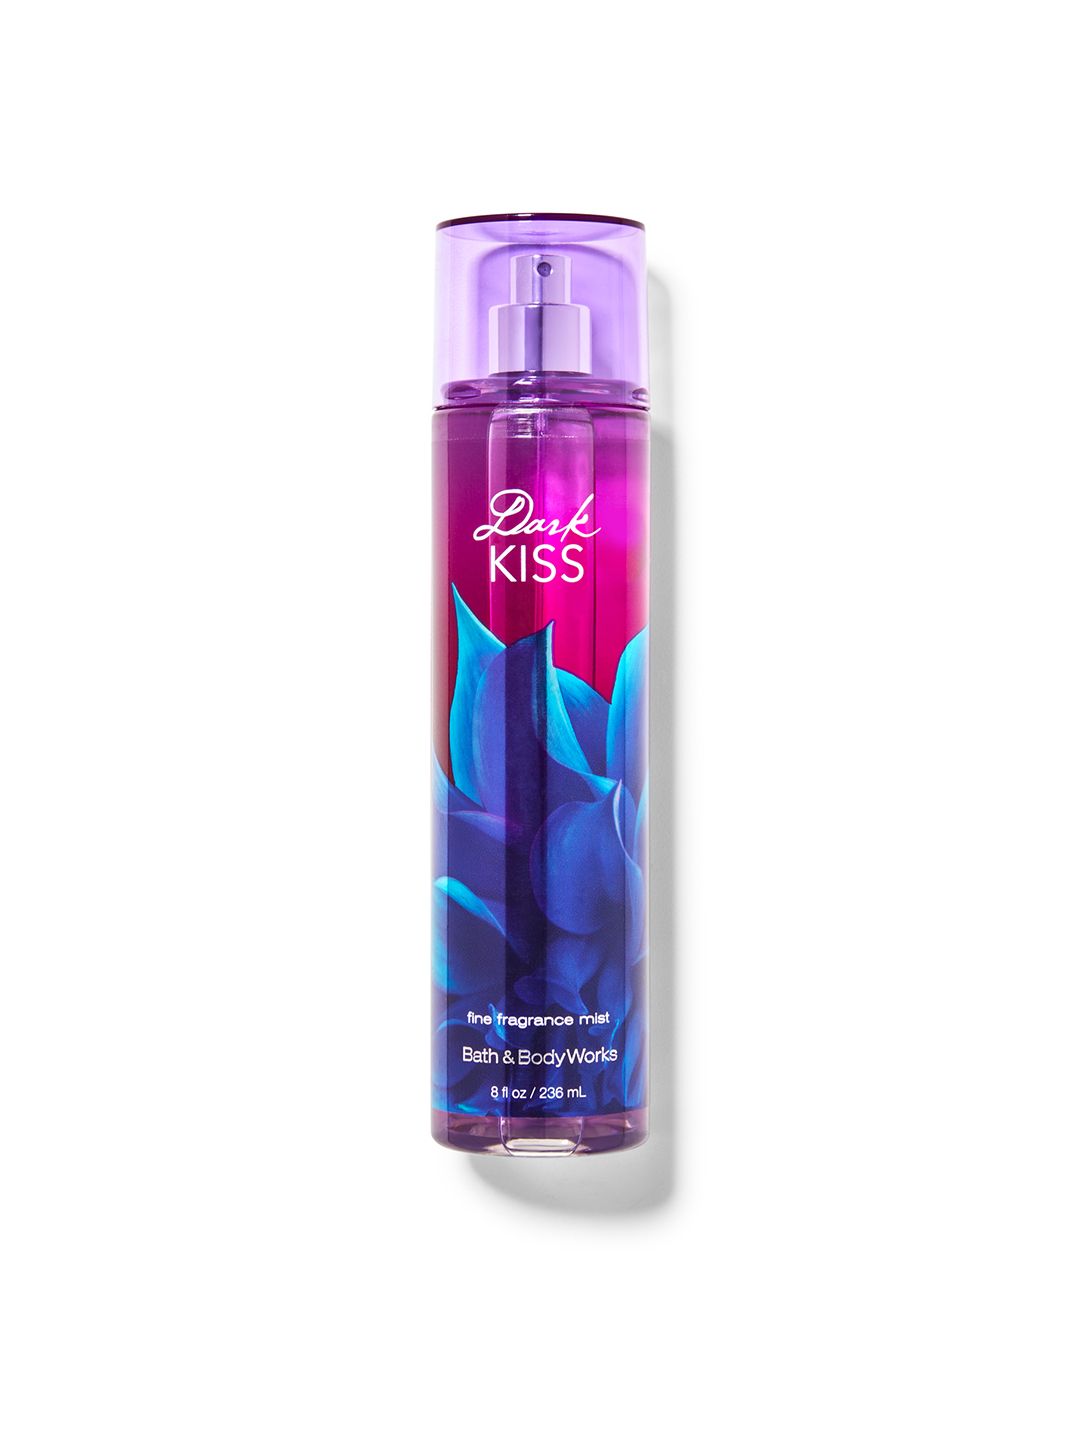 Bath & Body Works Dark Kiss Fine Fragrance Mist 236 ml Price in India